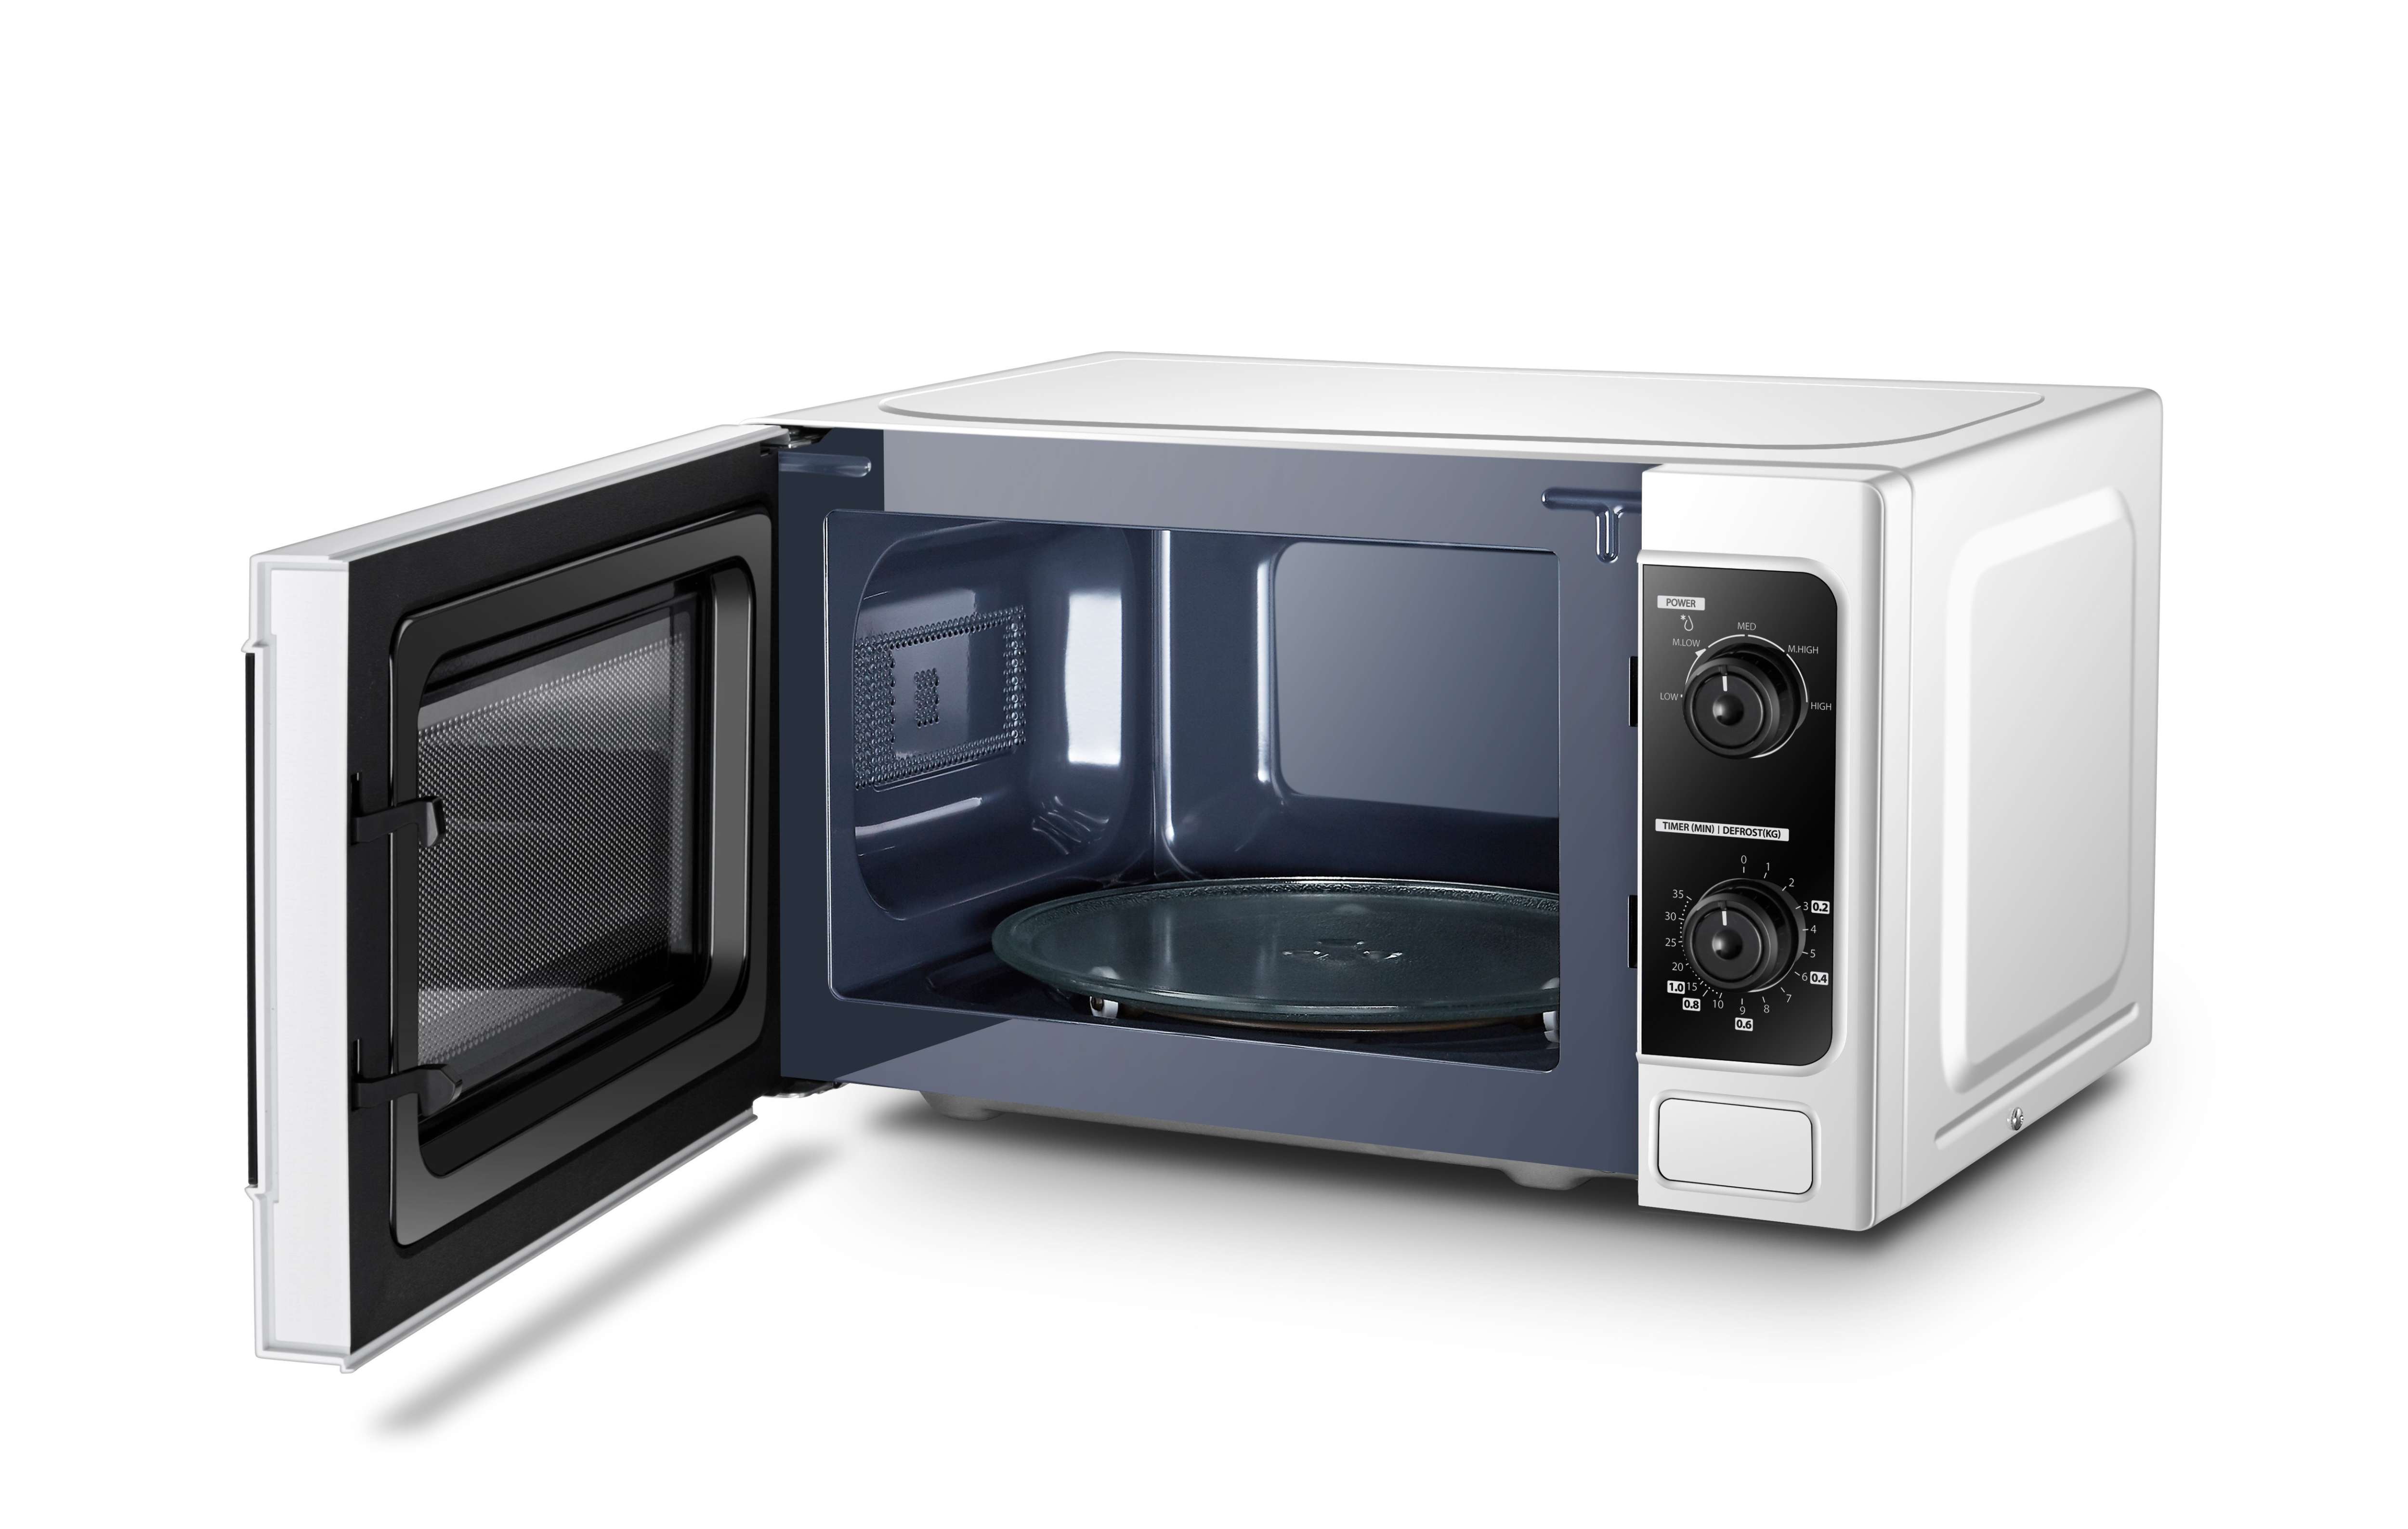 Toshiba 20L Manual Microwave Oven